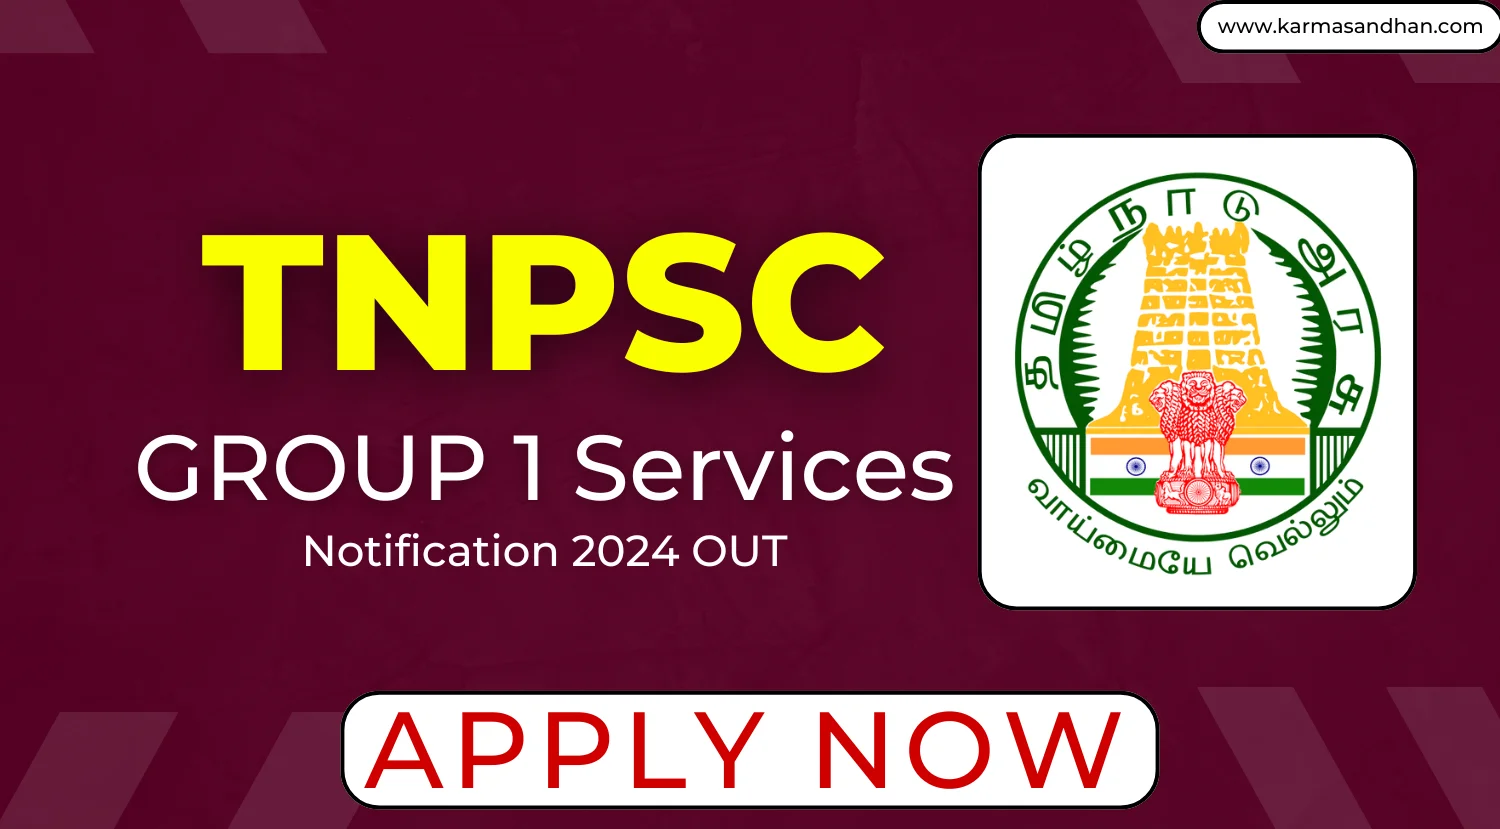 TNPSC Group 1 Recruitment 2024 Notification